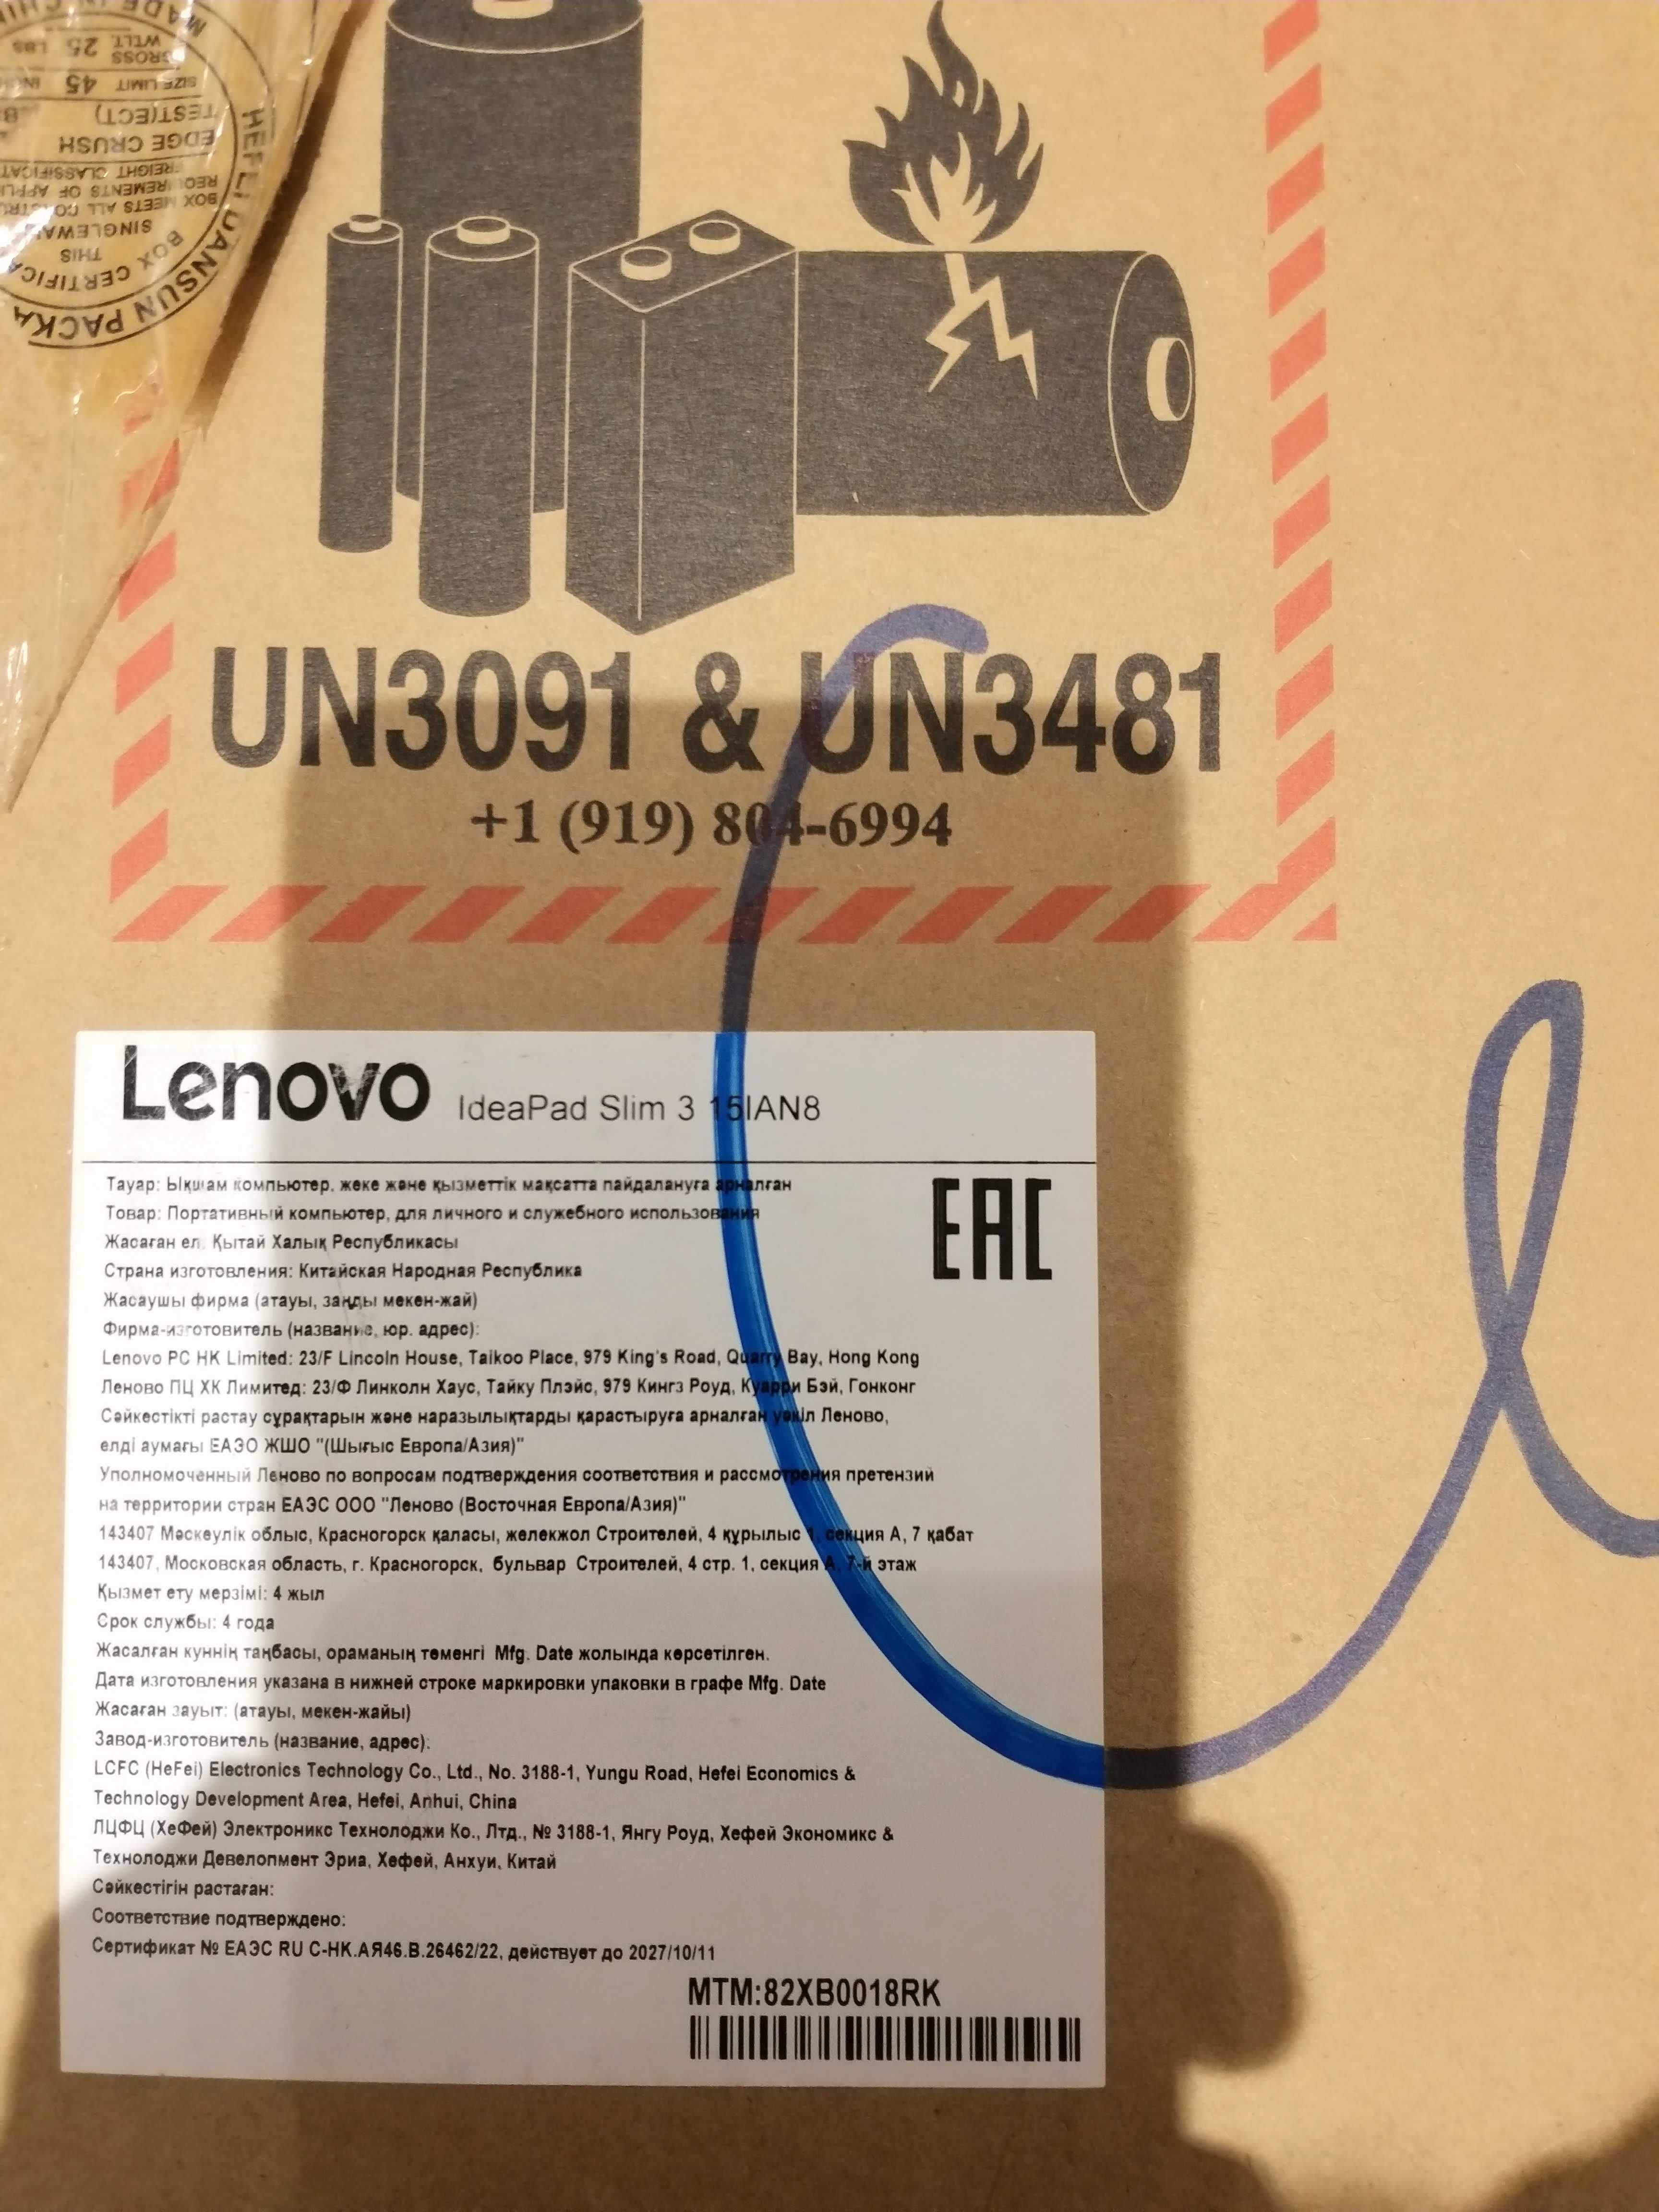 Ноутбук - ультрабук Lenovo IdeaPad Slim 3 15IAN8 новый